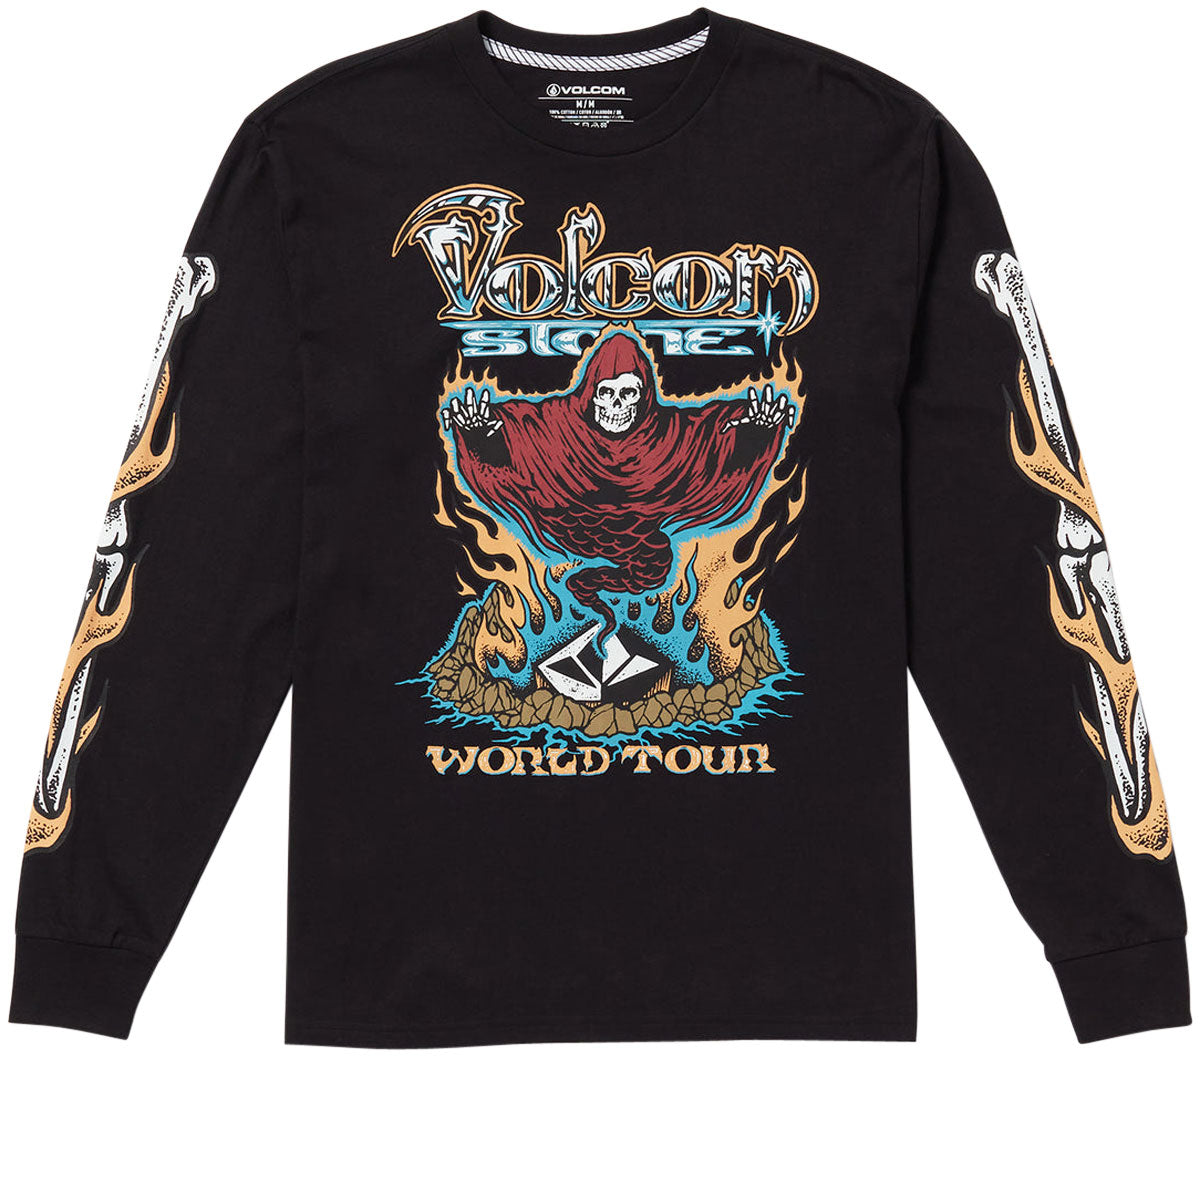 Volcom Stone Ghost Long Sleeve T-Shirt - Black image 1